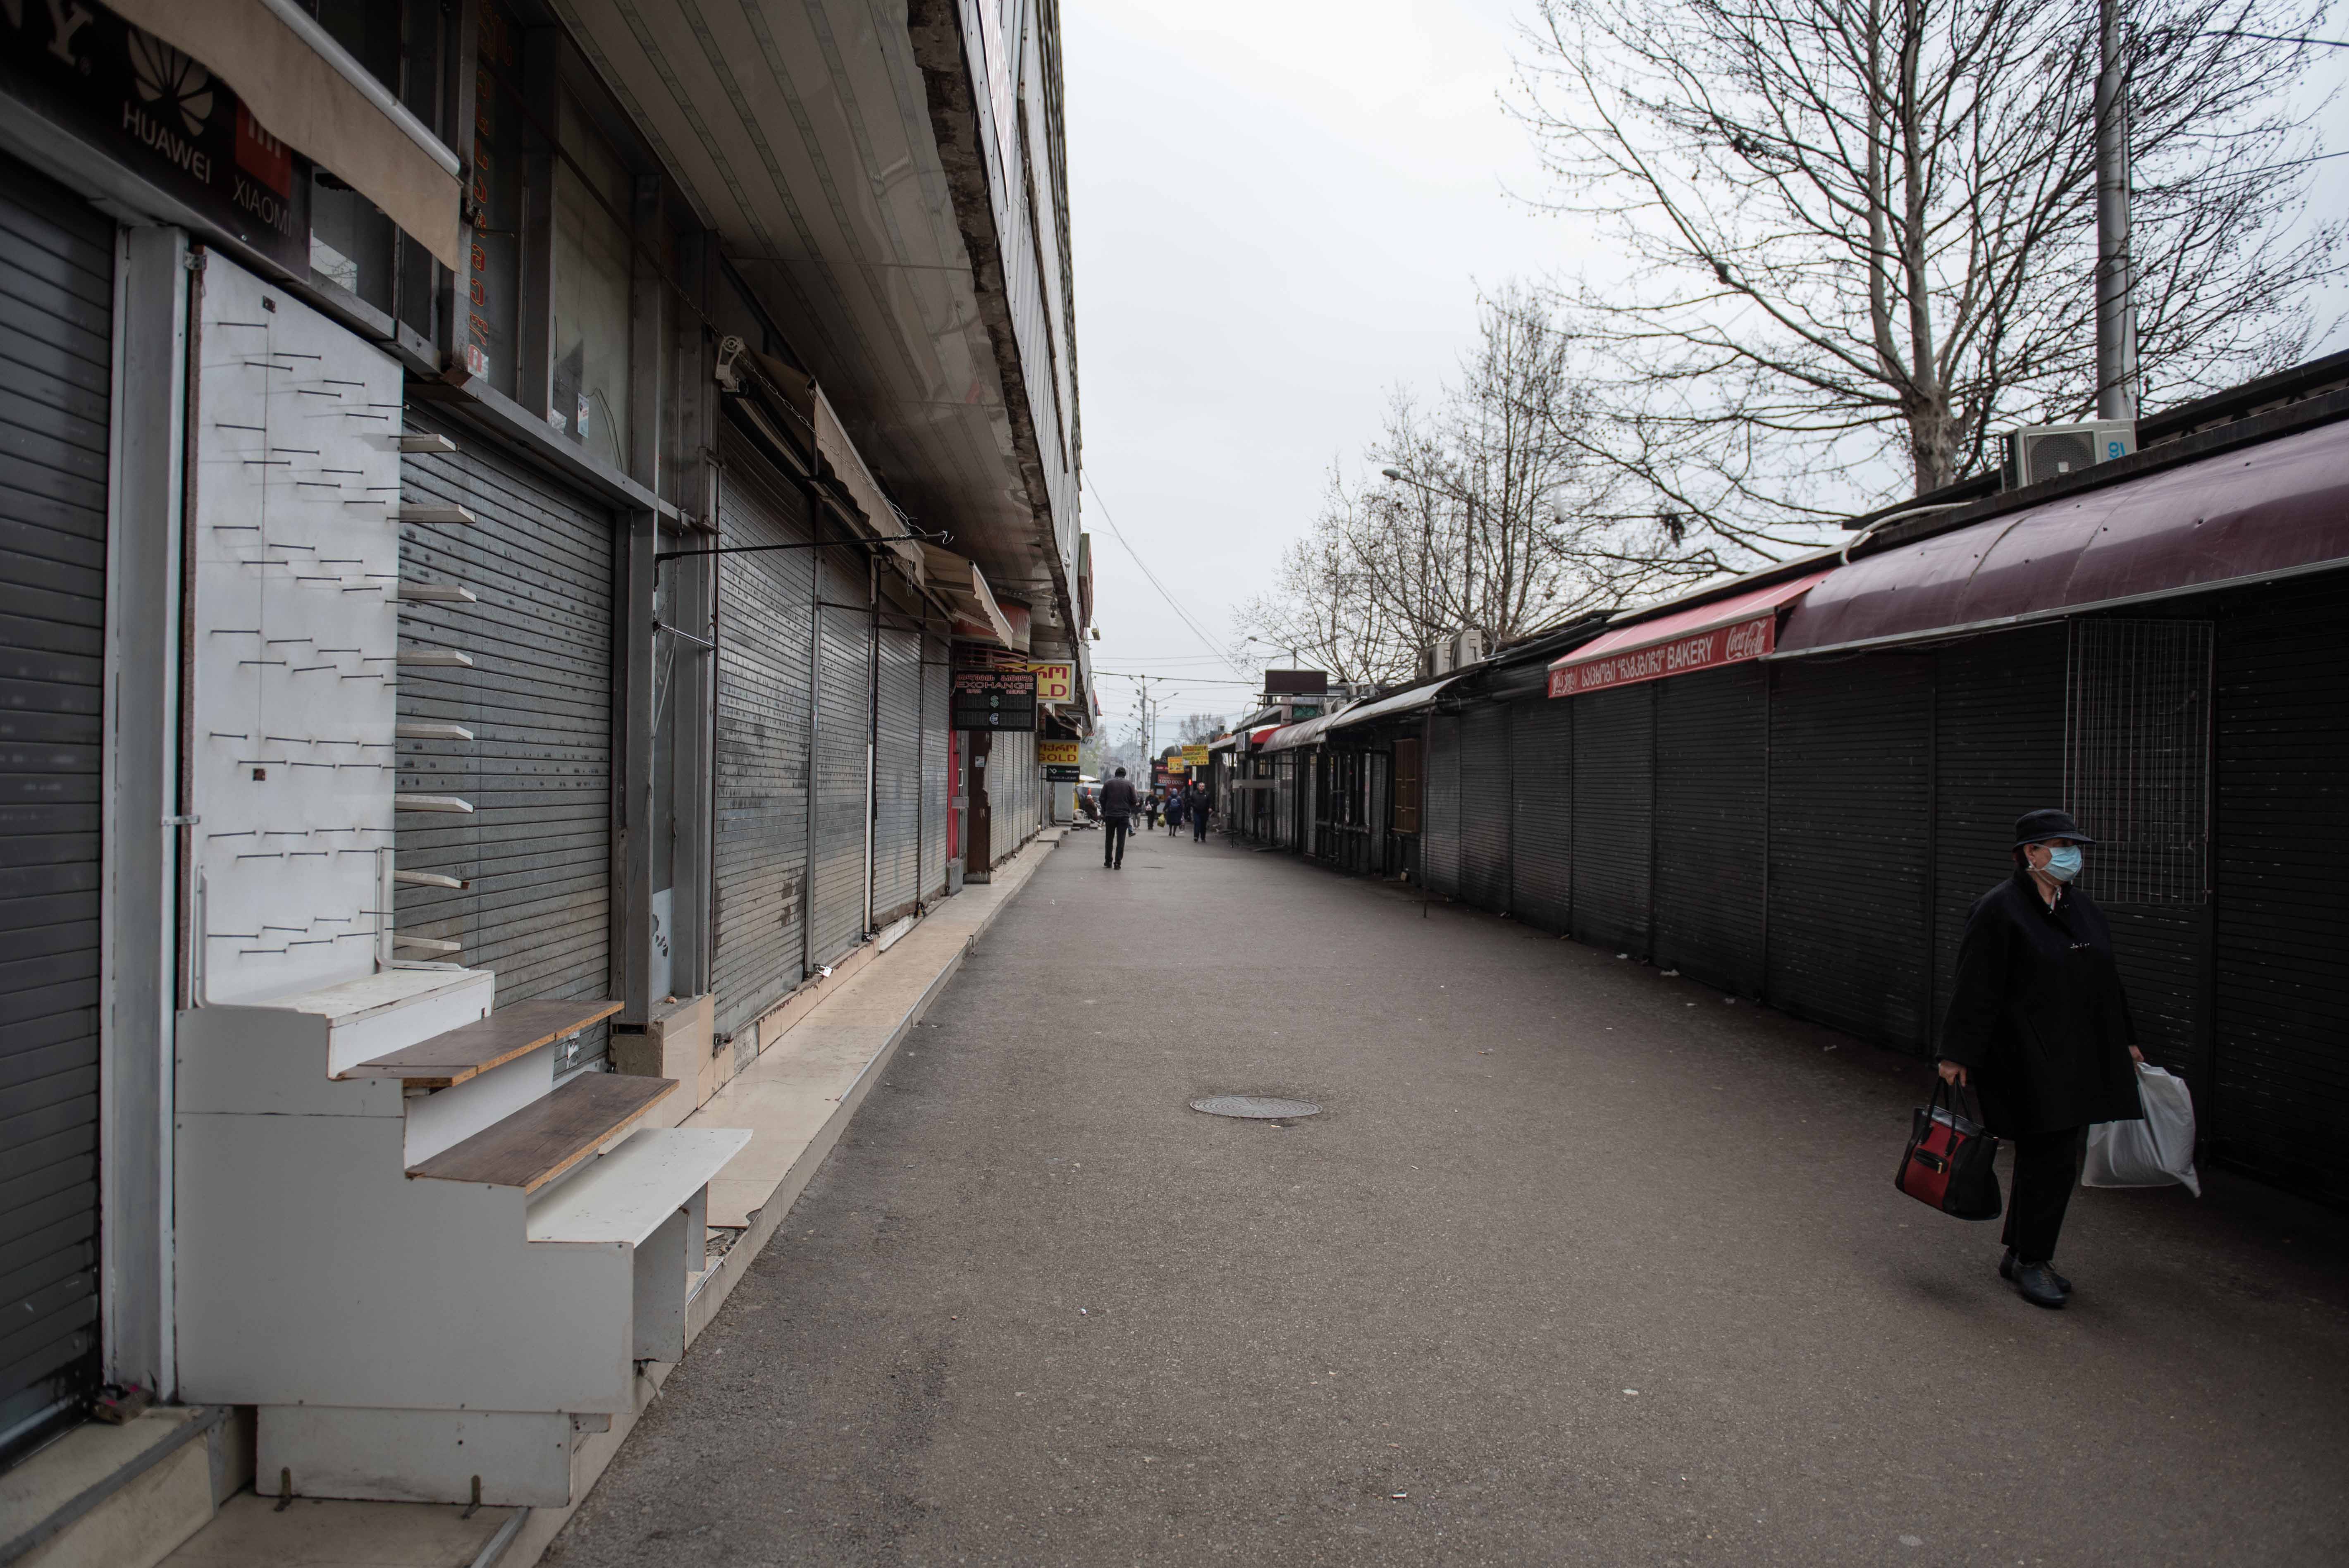 Most shops near Station Square have closed down. Photo: Mariam Nikuradze/OC Media.